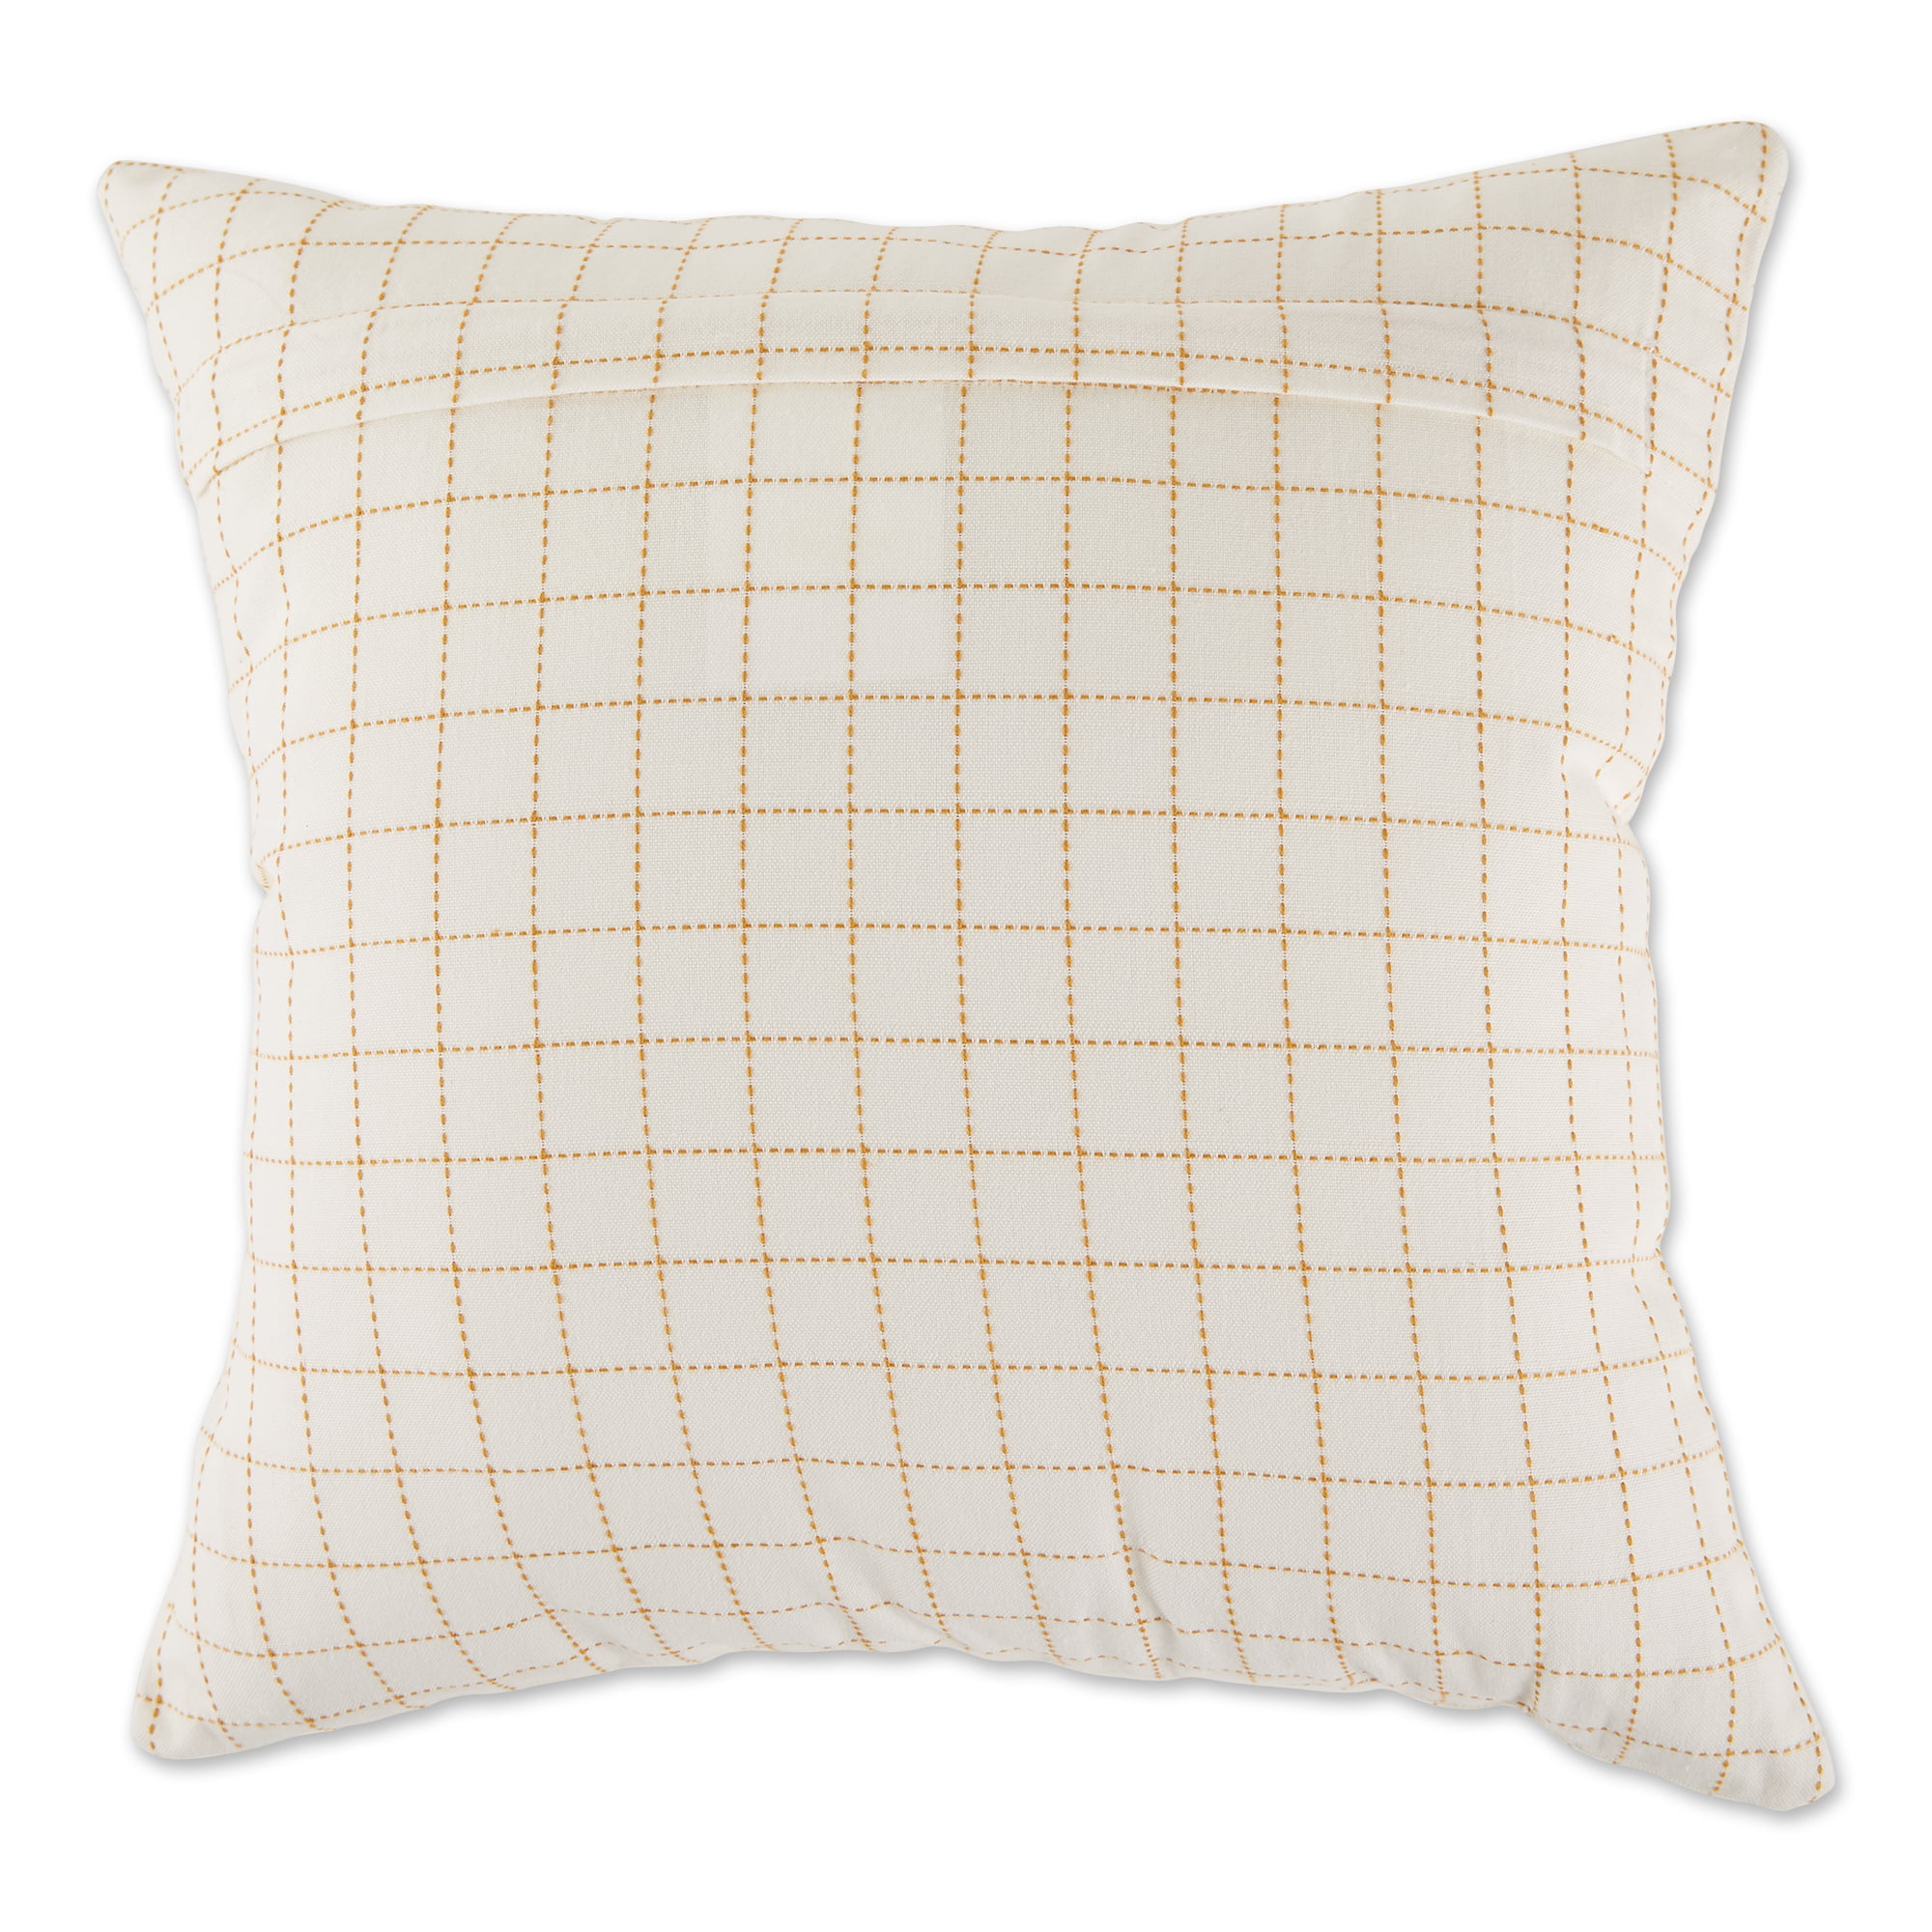 DII Asst Black Farmhouse Cotton Pillow Cover 18x18 inch 4 Piece